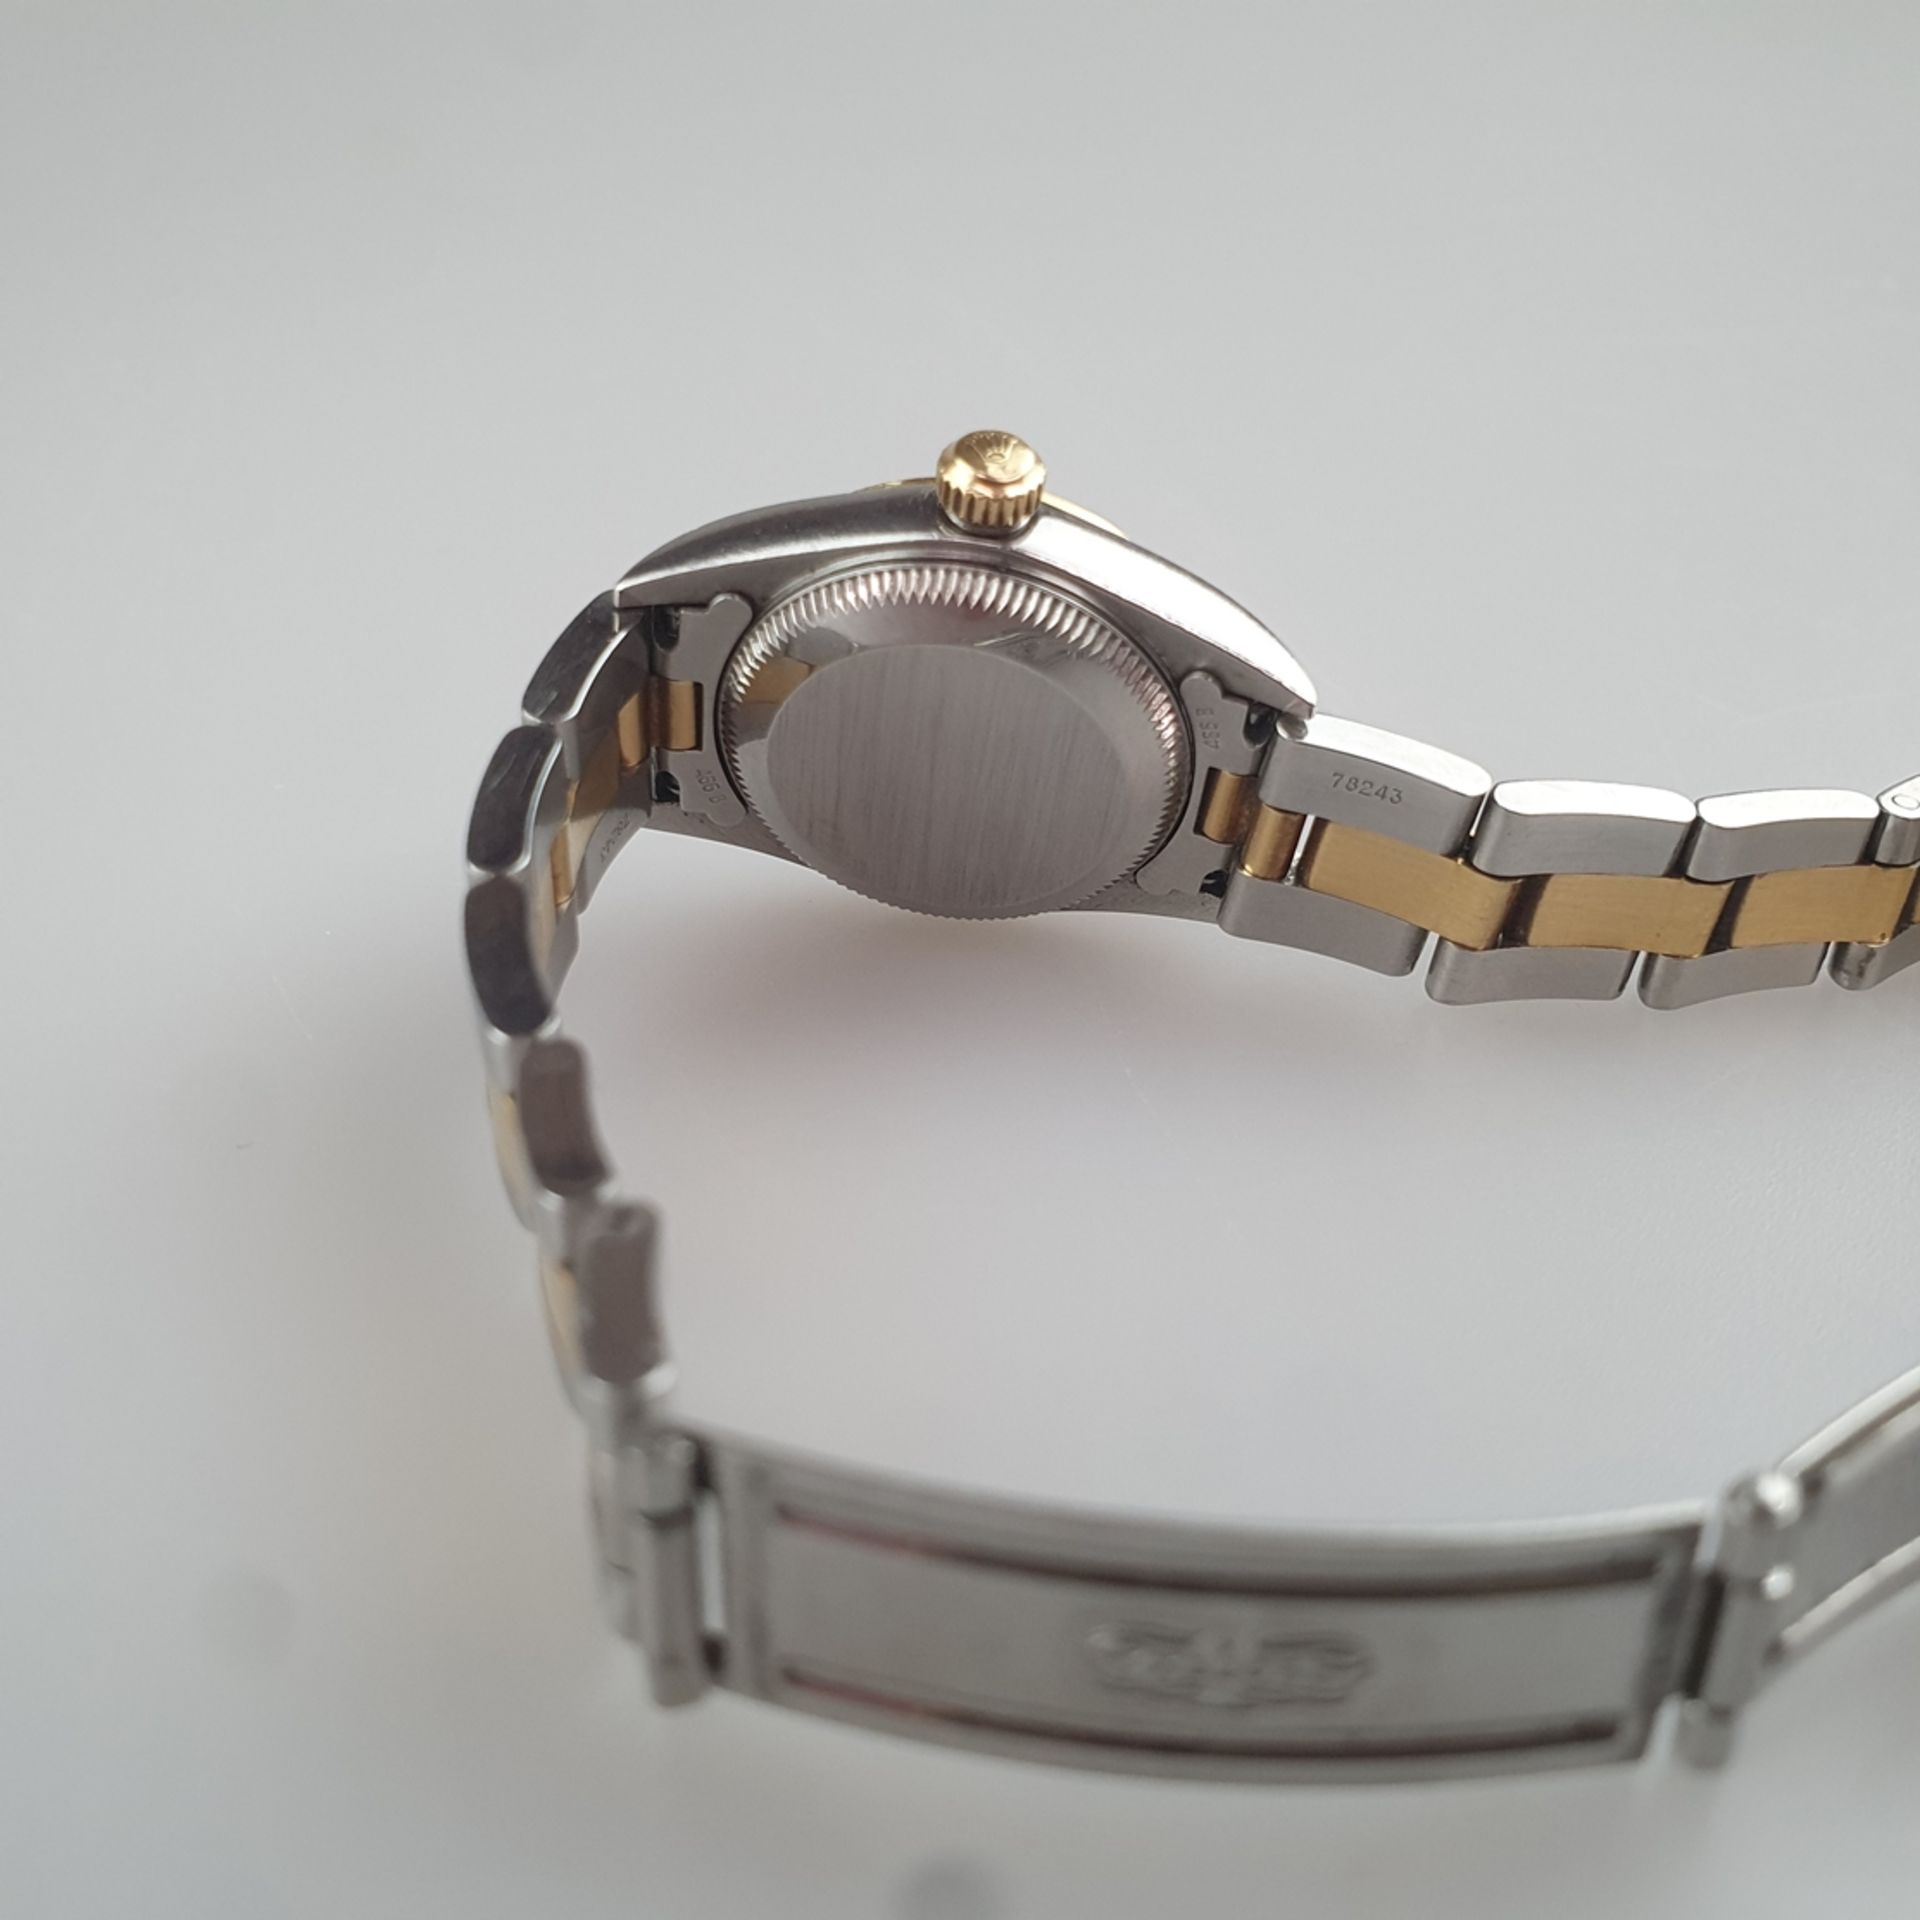 Rolex-Damenarmbanduhr - Oyster Perpetual, Datejust, bicolores Gehäuse und Armband aus 18K Gelbgold - Image 6 of 10